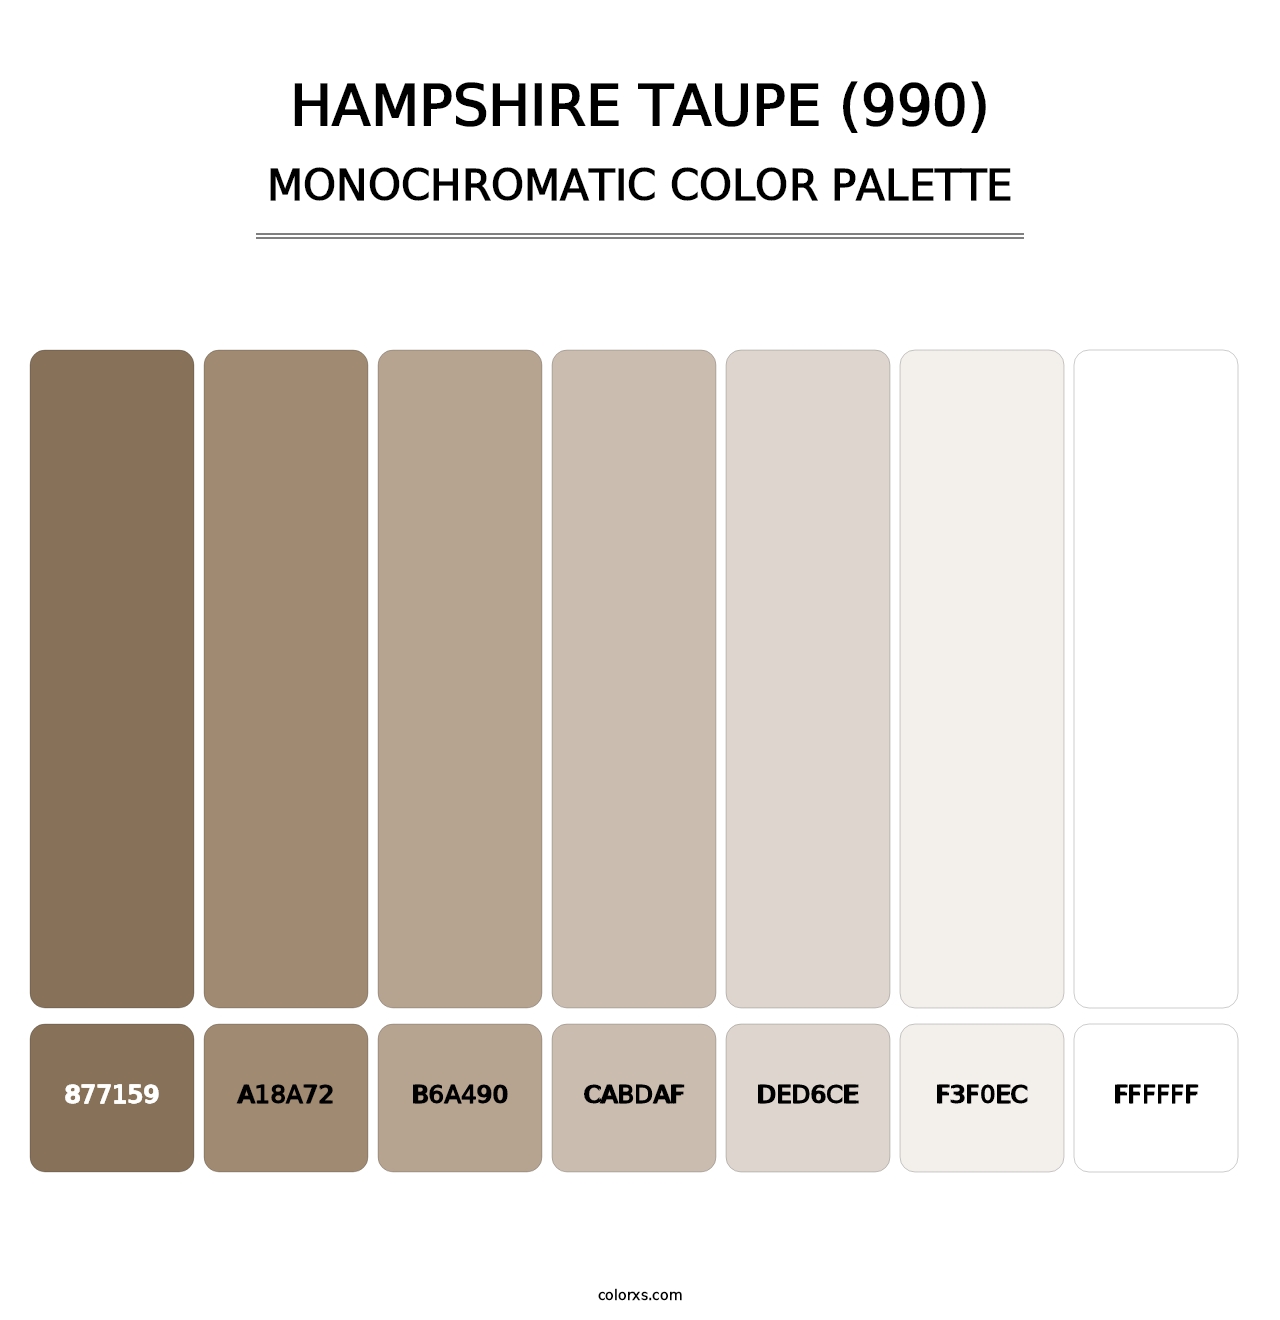 Hampshire Taupe (990) - Monochromatic Color Palette